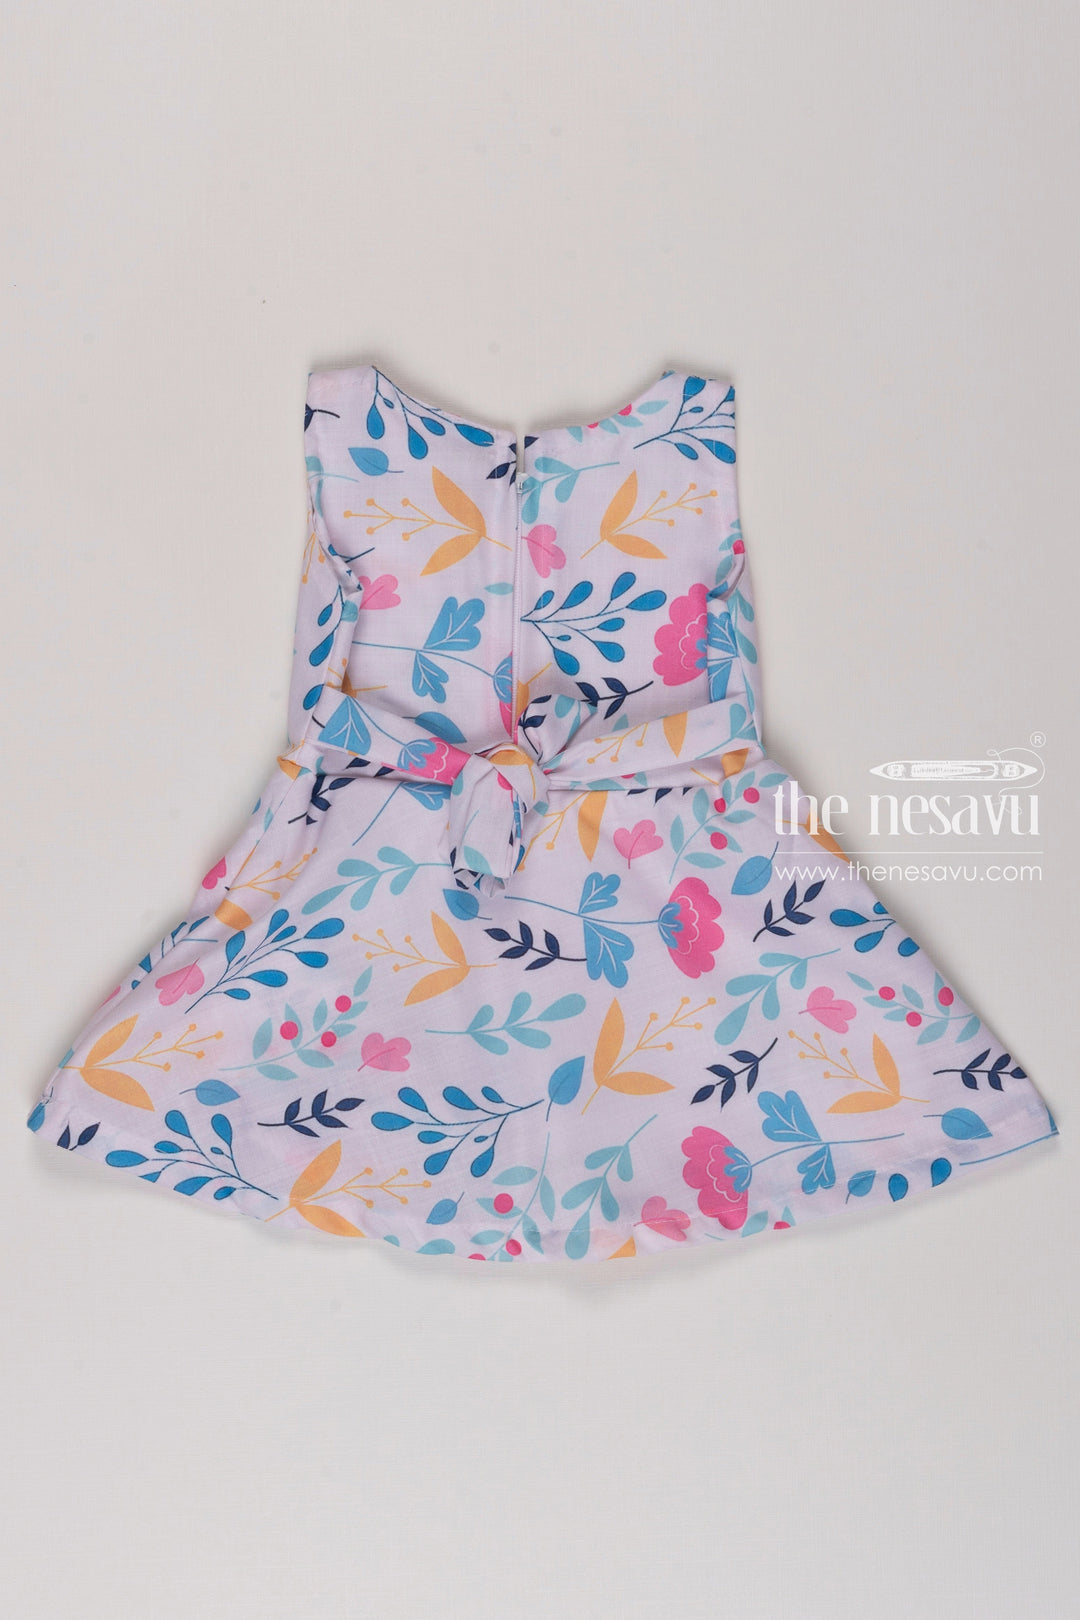 The Nesavu Baby Fancy Frock Whimsical Garden Party ALine Frock for Girls Nesavu Girls Sleeveless Floral Print Dress | Perfect for Summer Days | The Nesavu